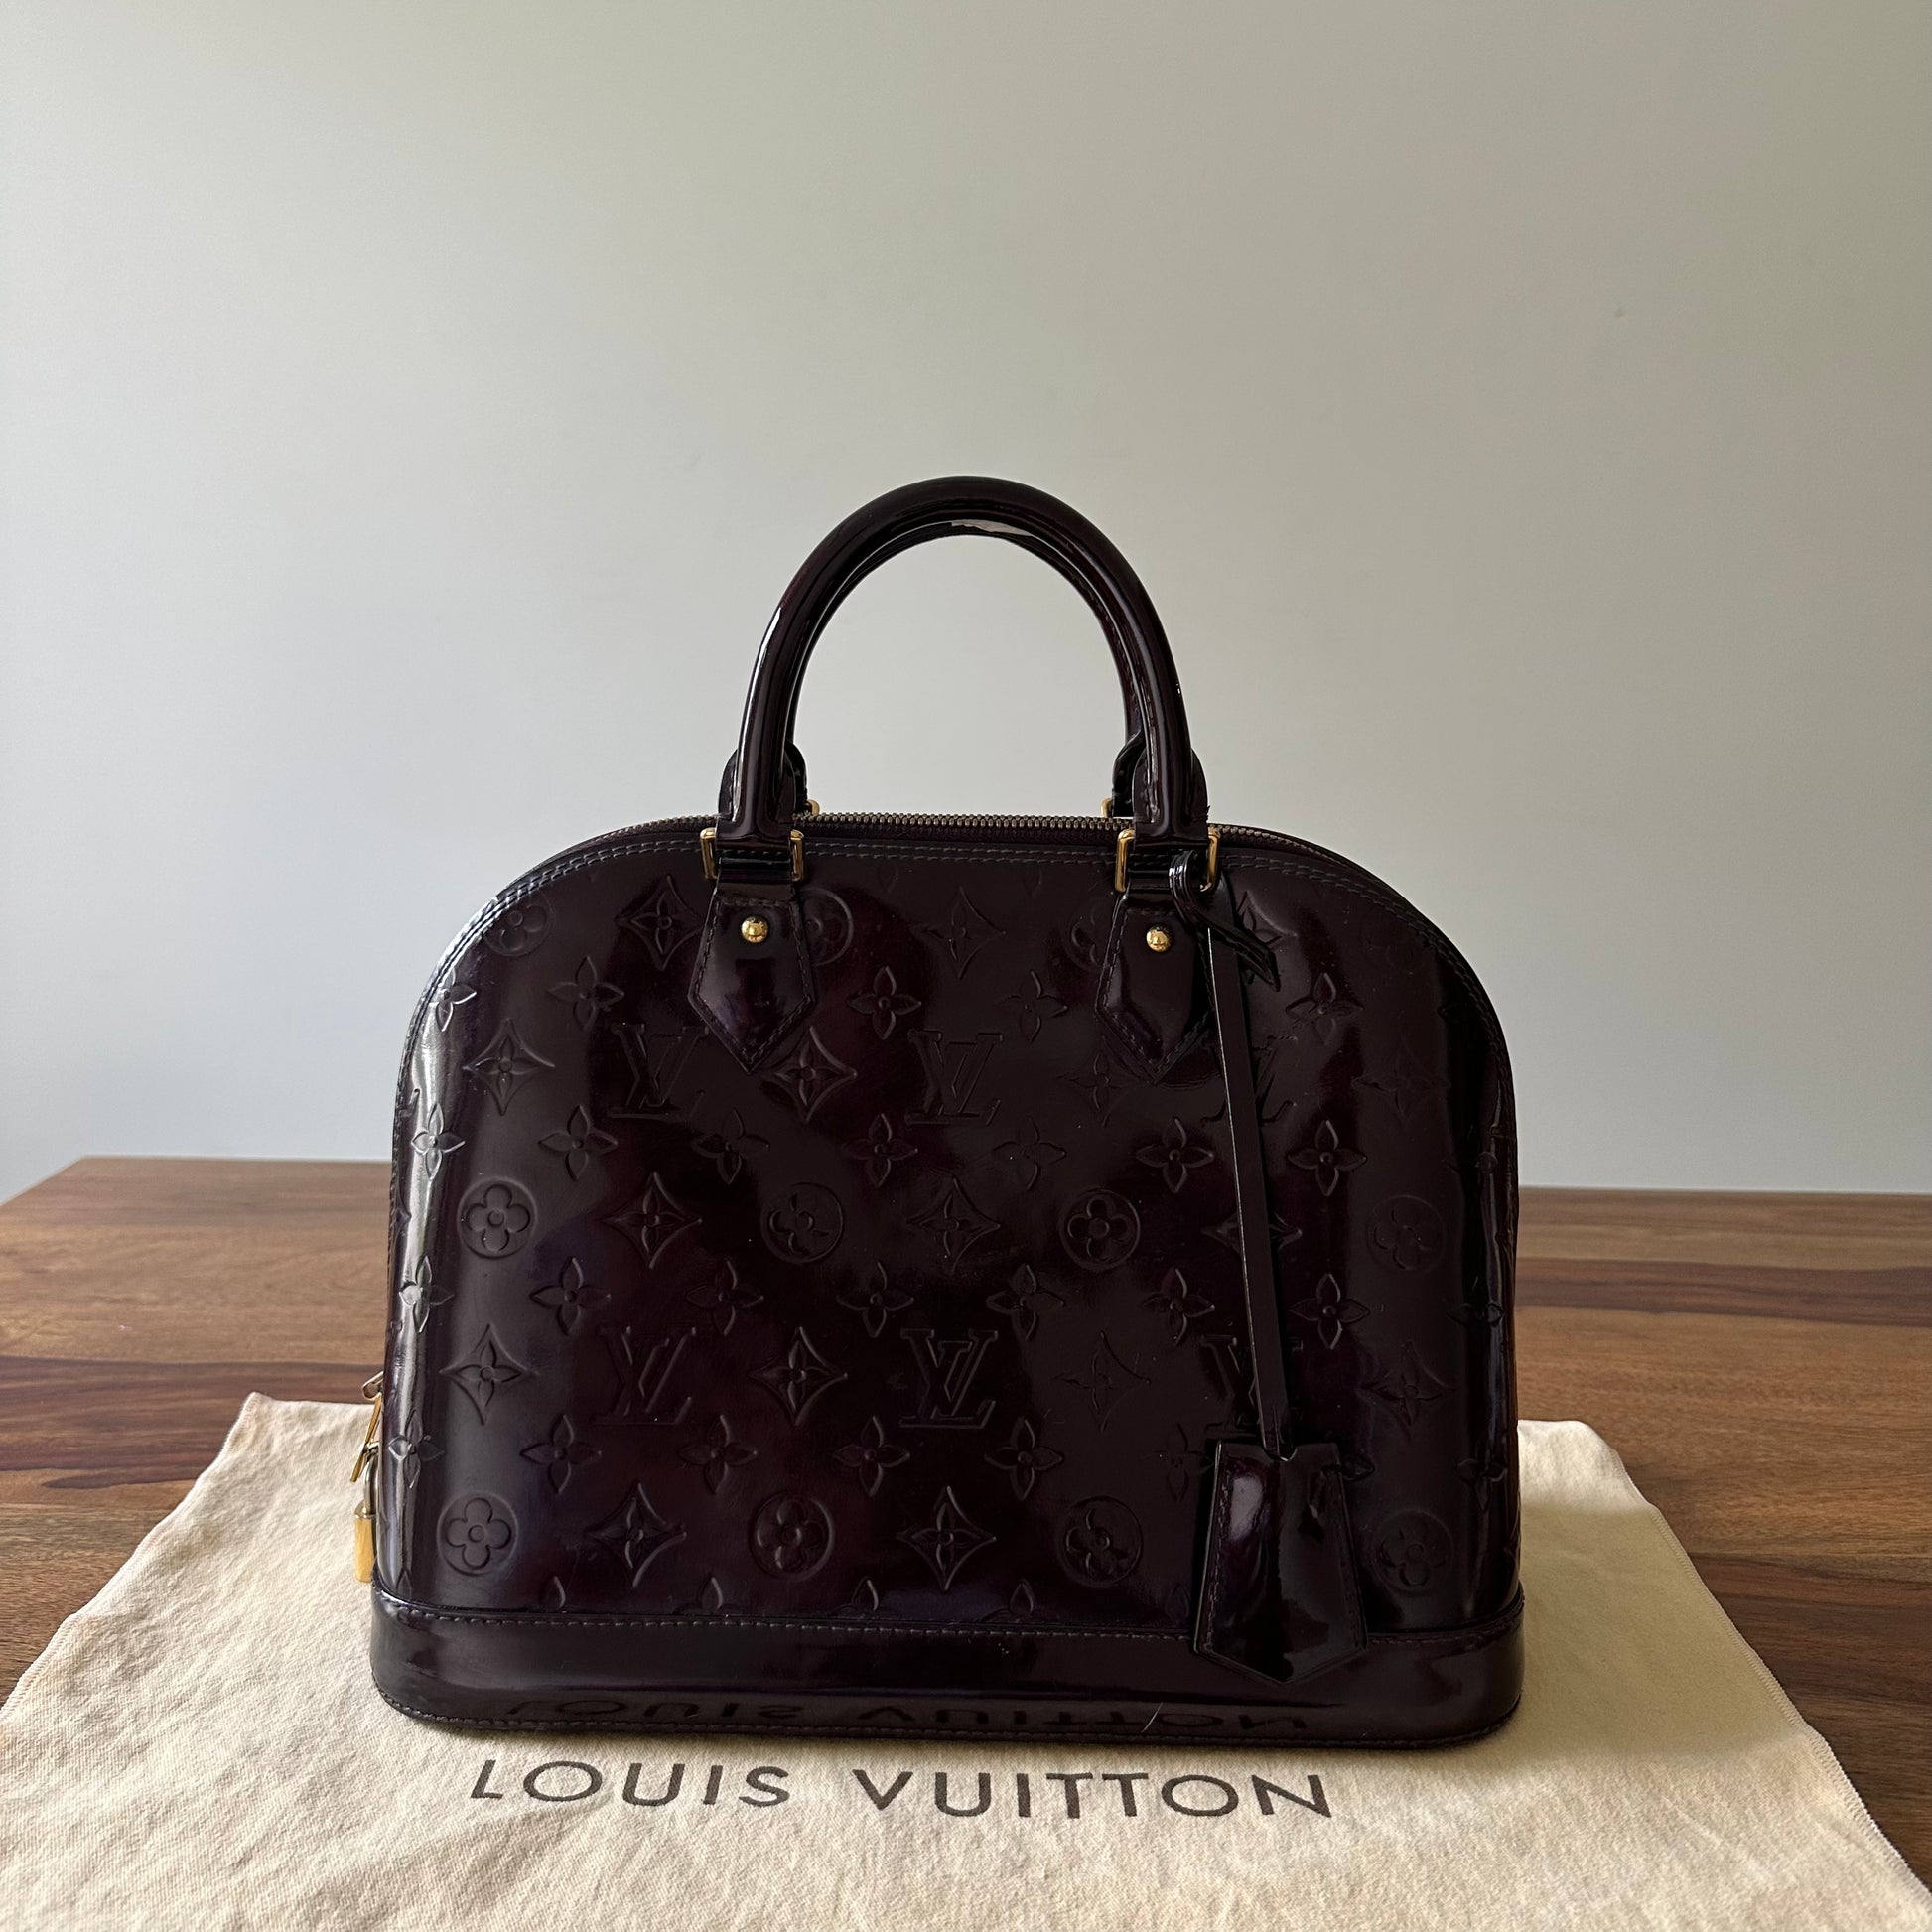 Buy Vernis Vuitton Bag Online In India -  India